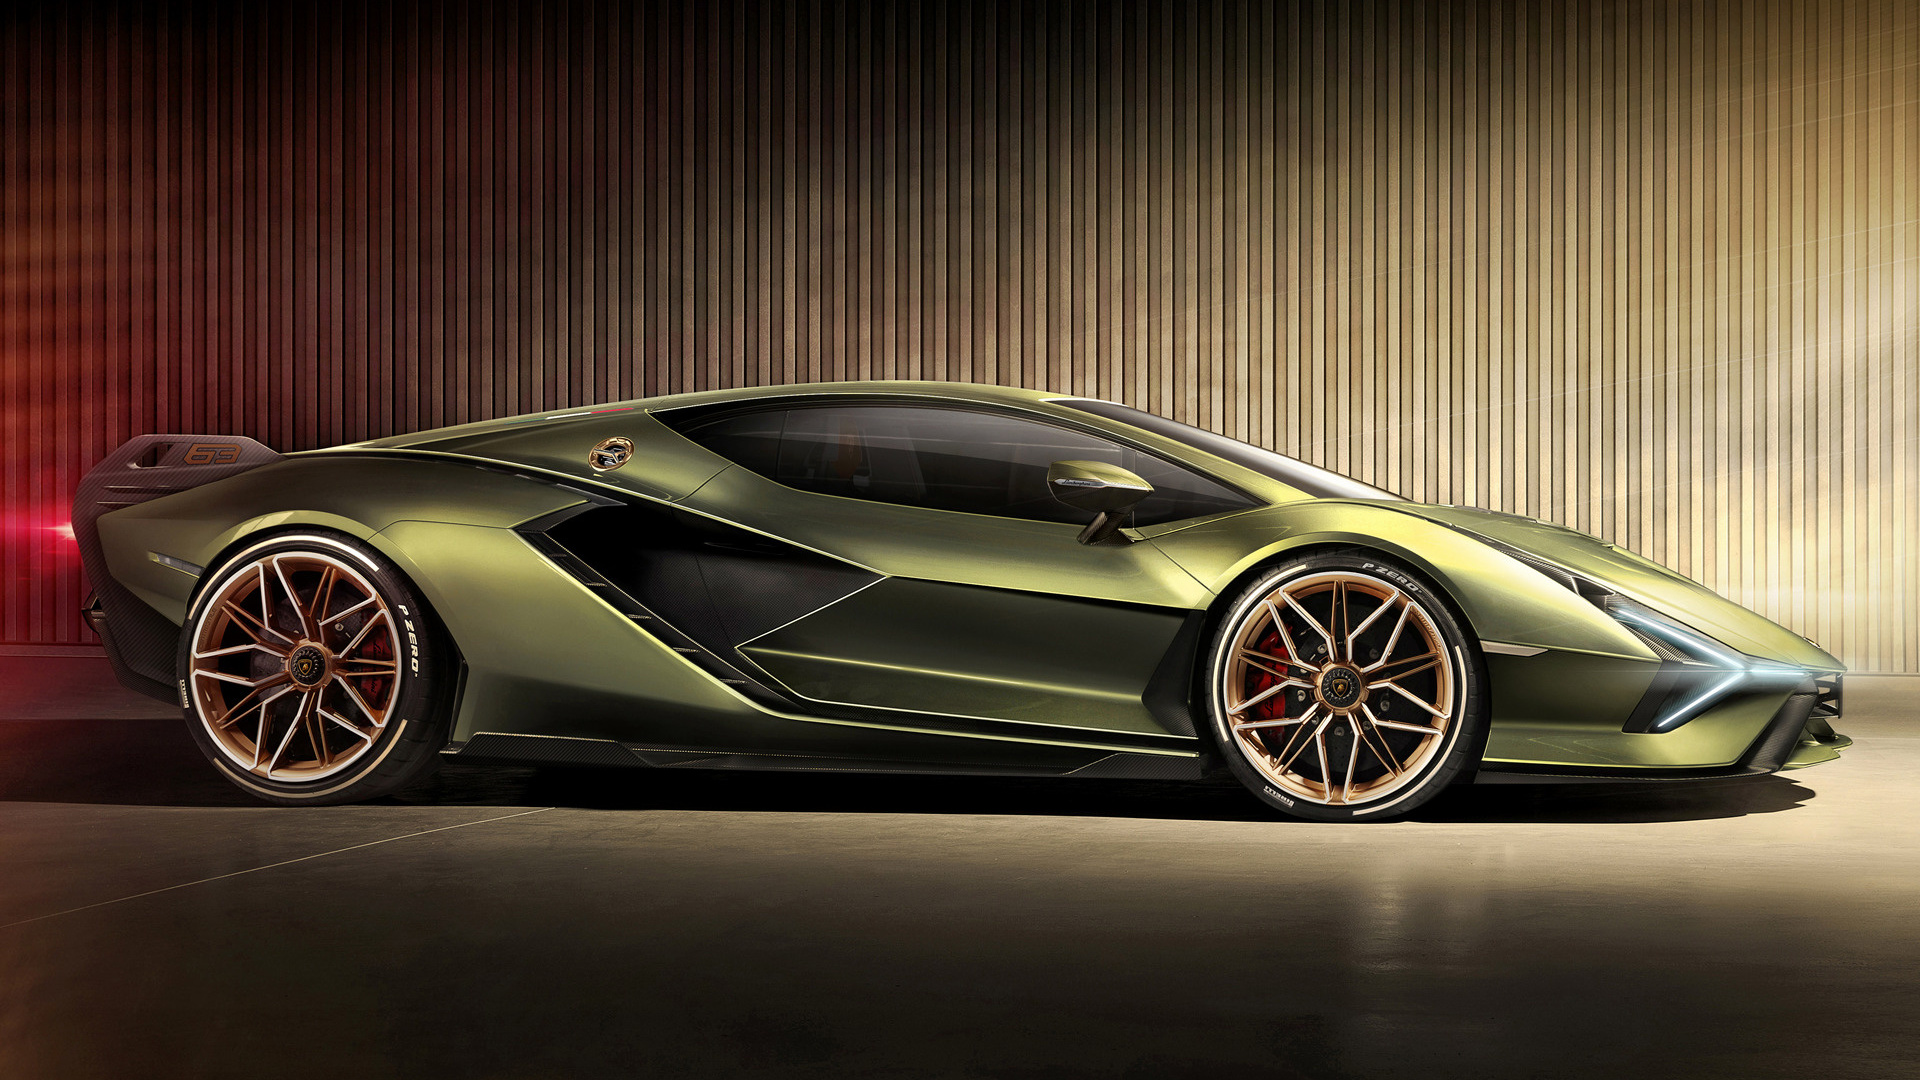 2020 Lamborghini Sian FKP 37 - Wallpapers and HD Images ...